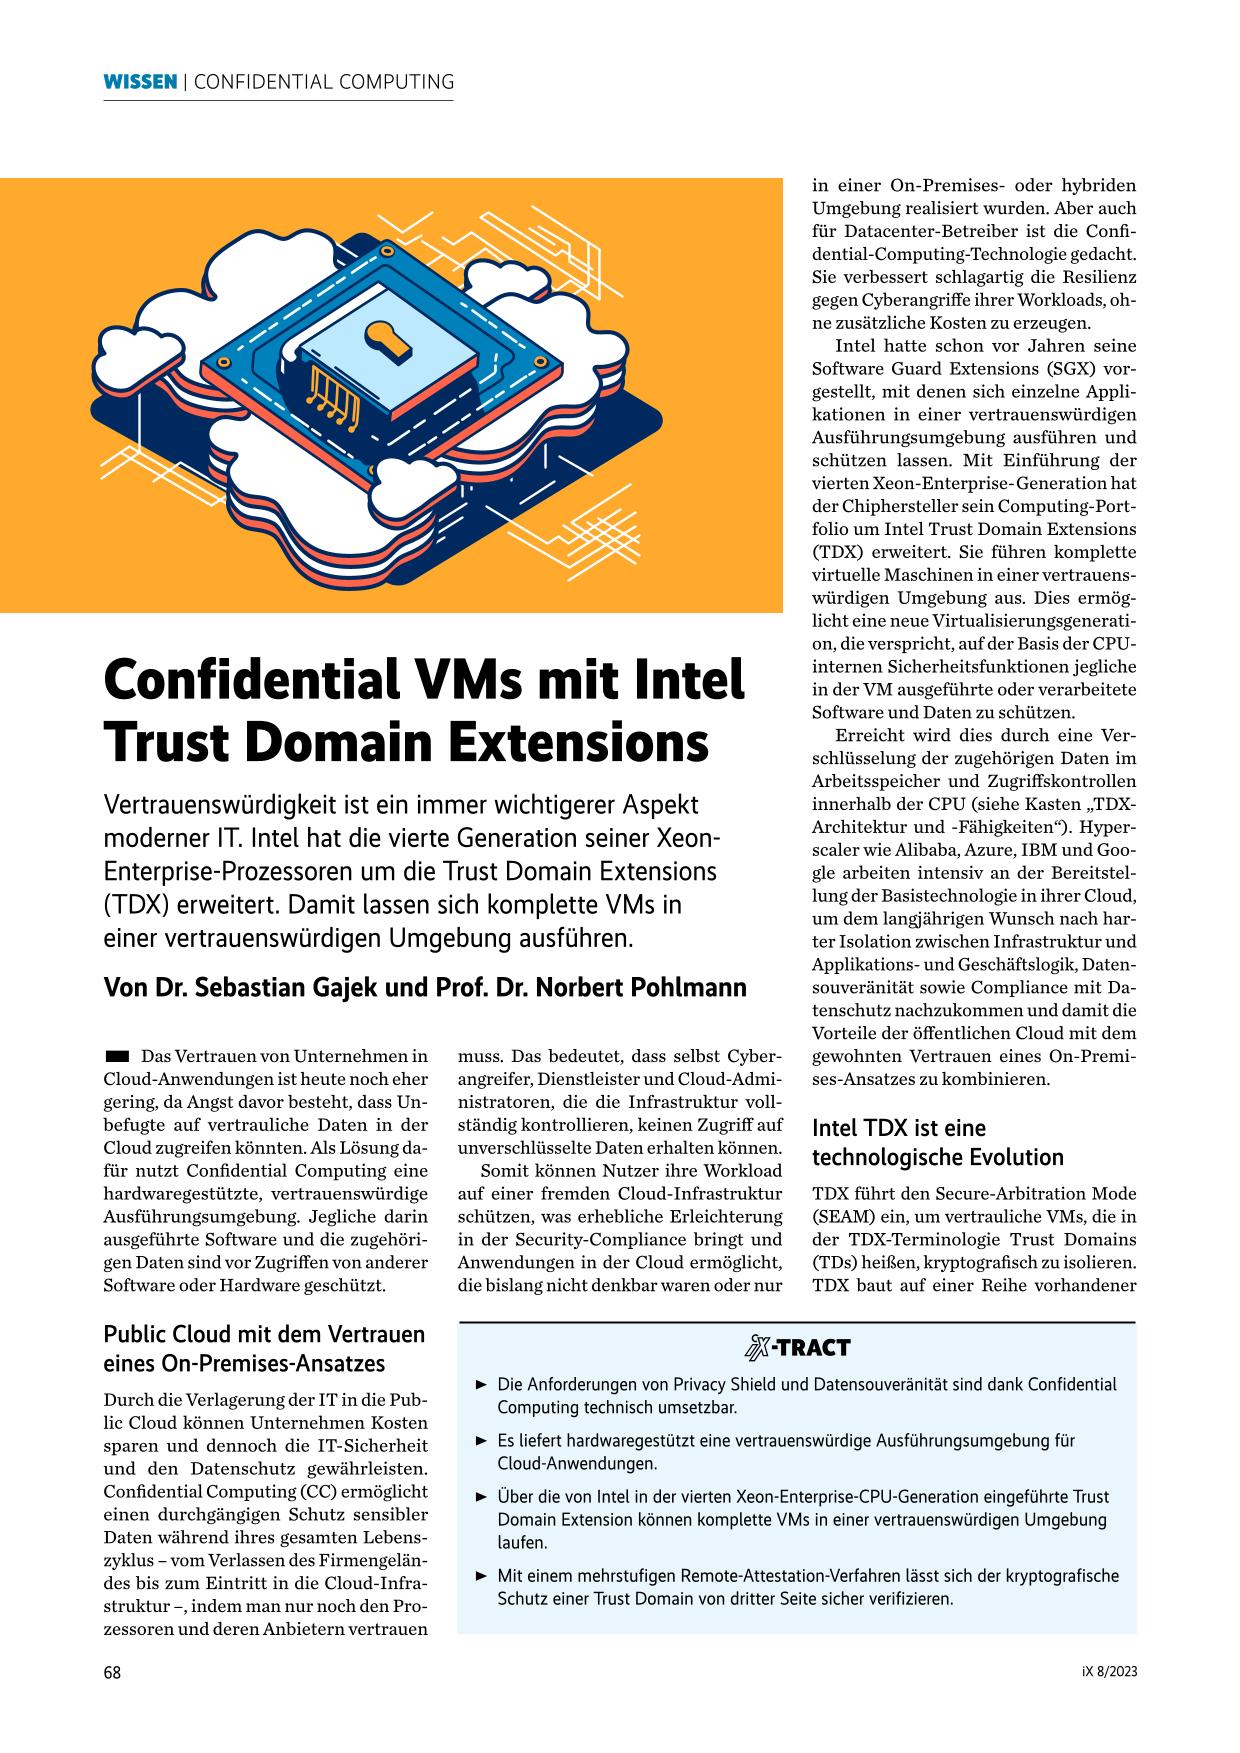 Confidential Computing – Intel TDX